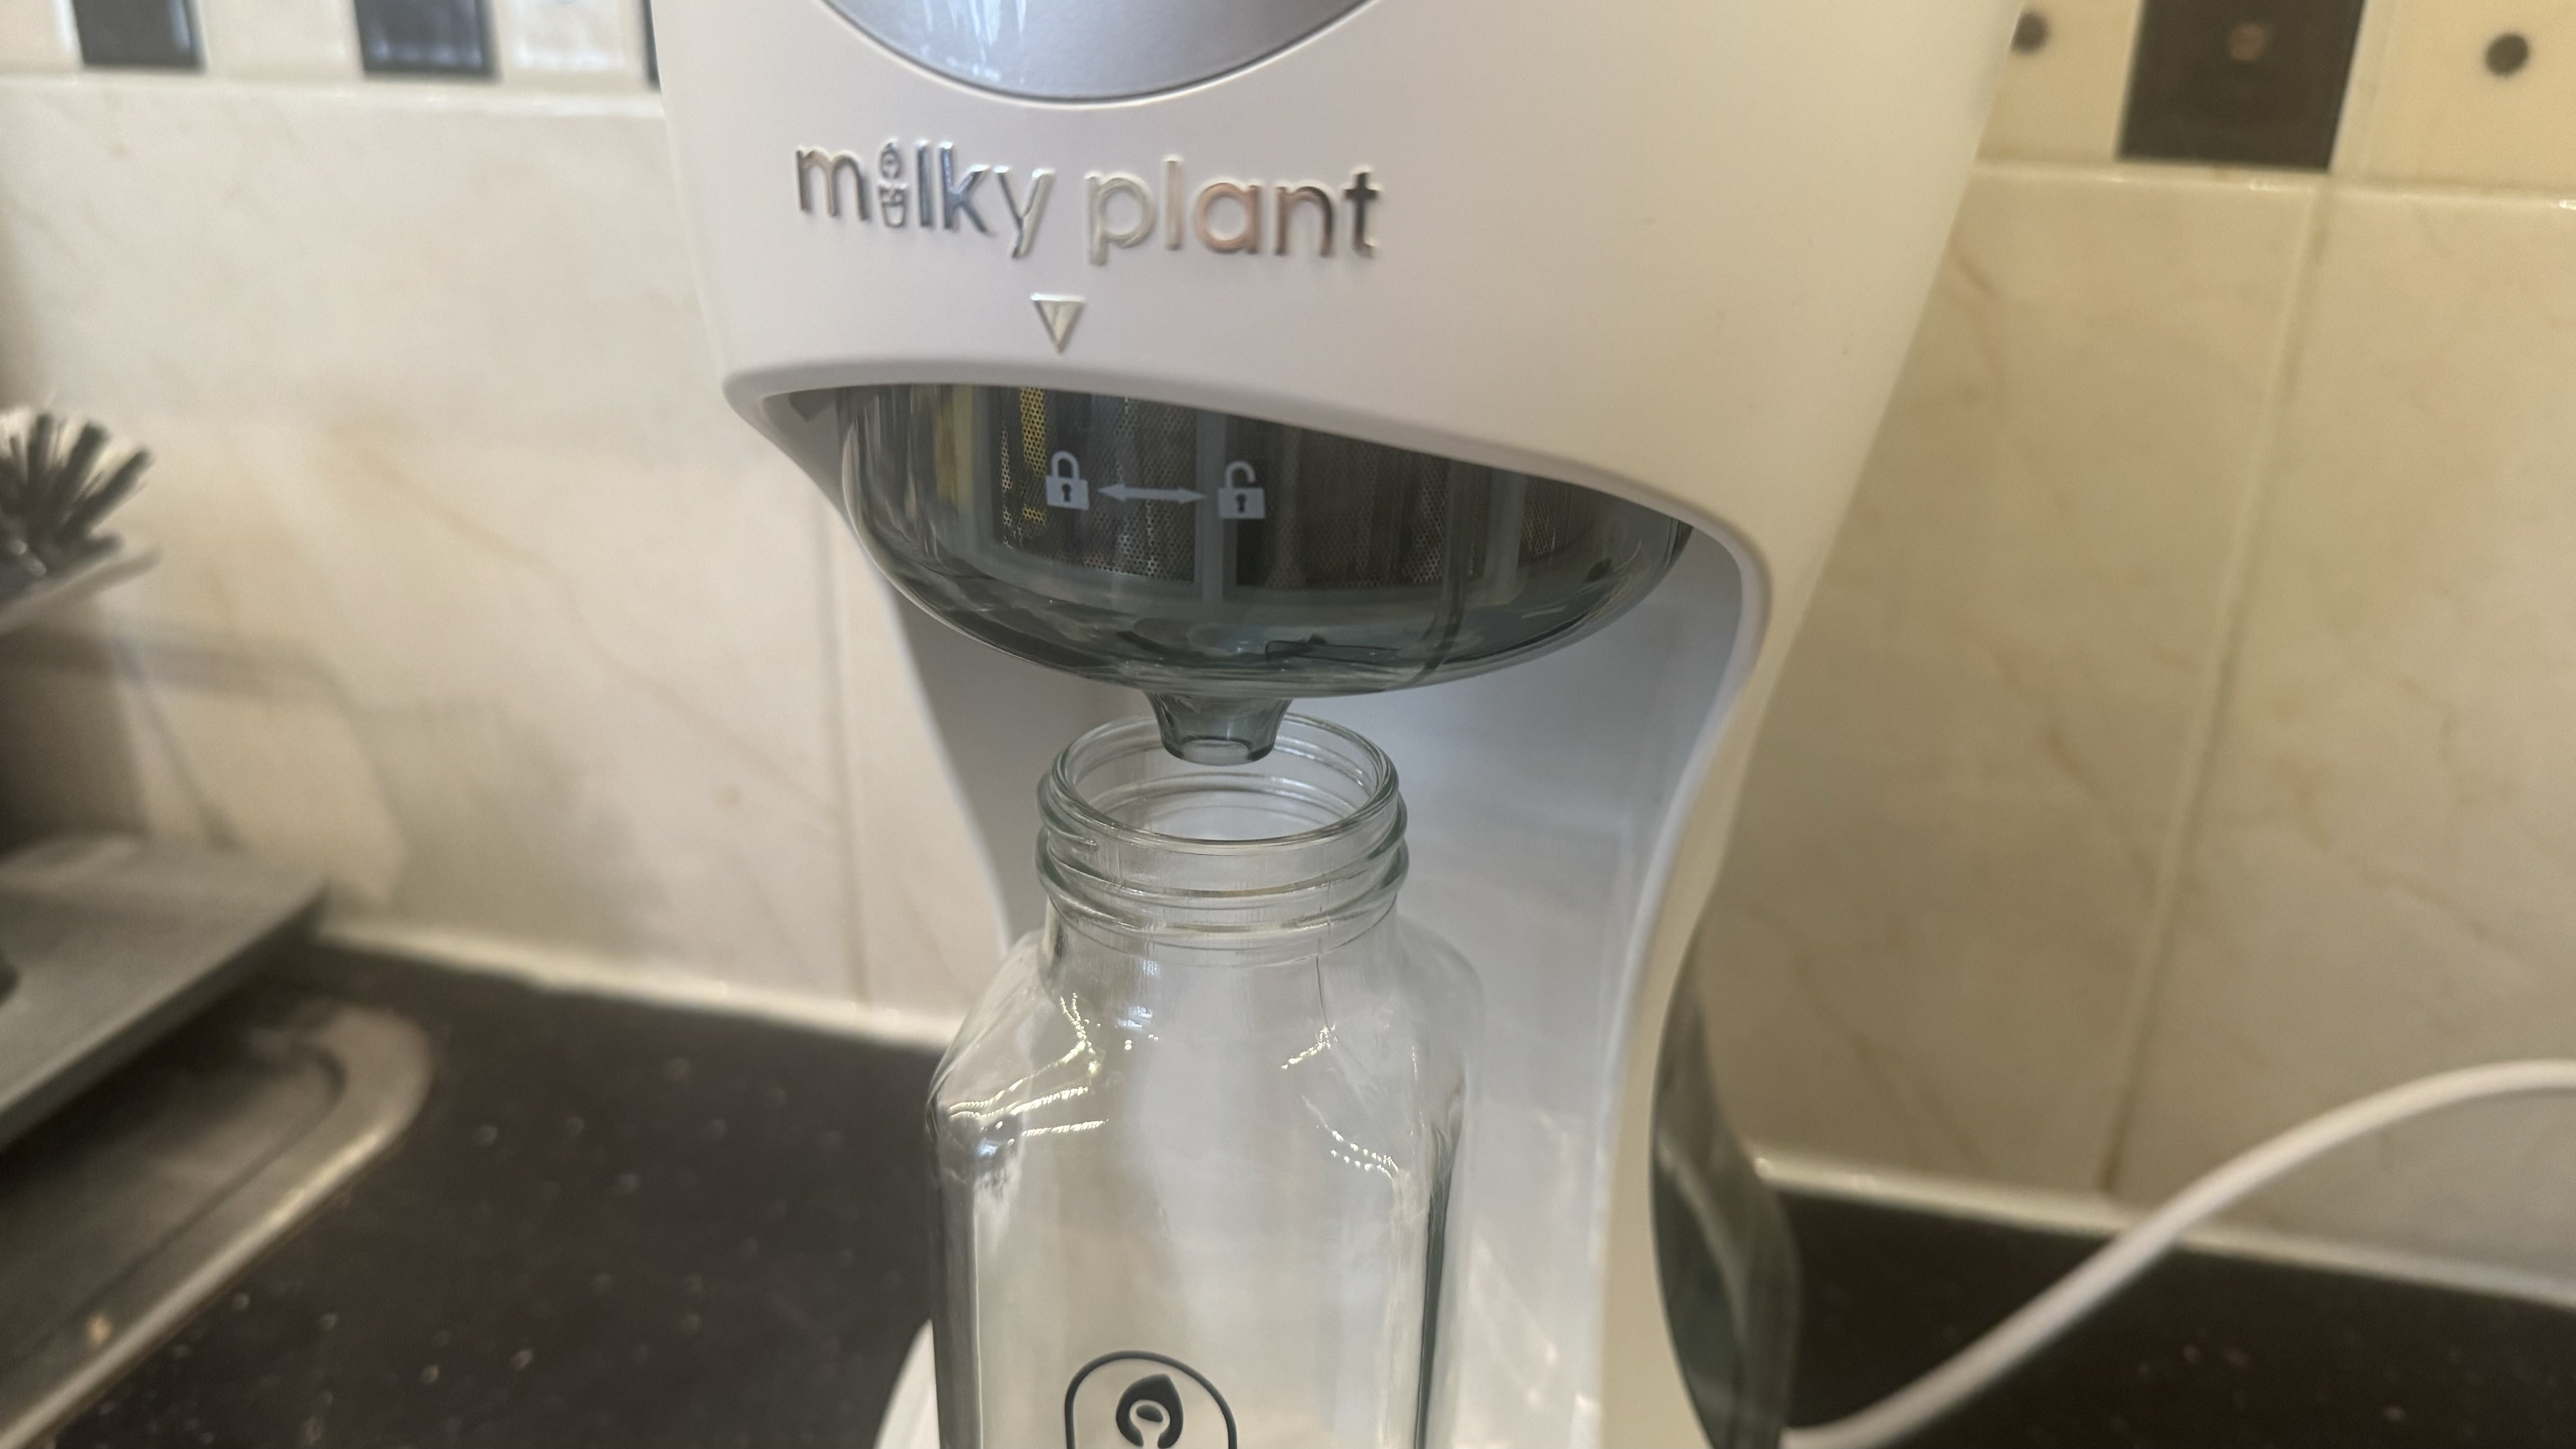 Milky Plant nut milk maker on a counter making oat milk